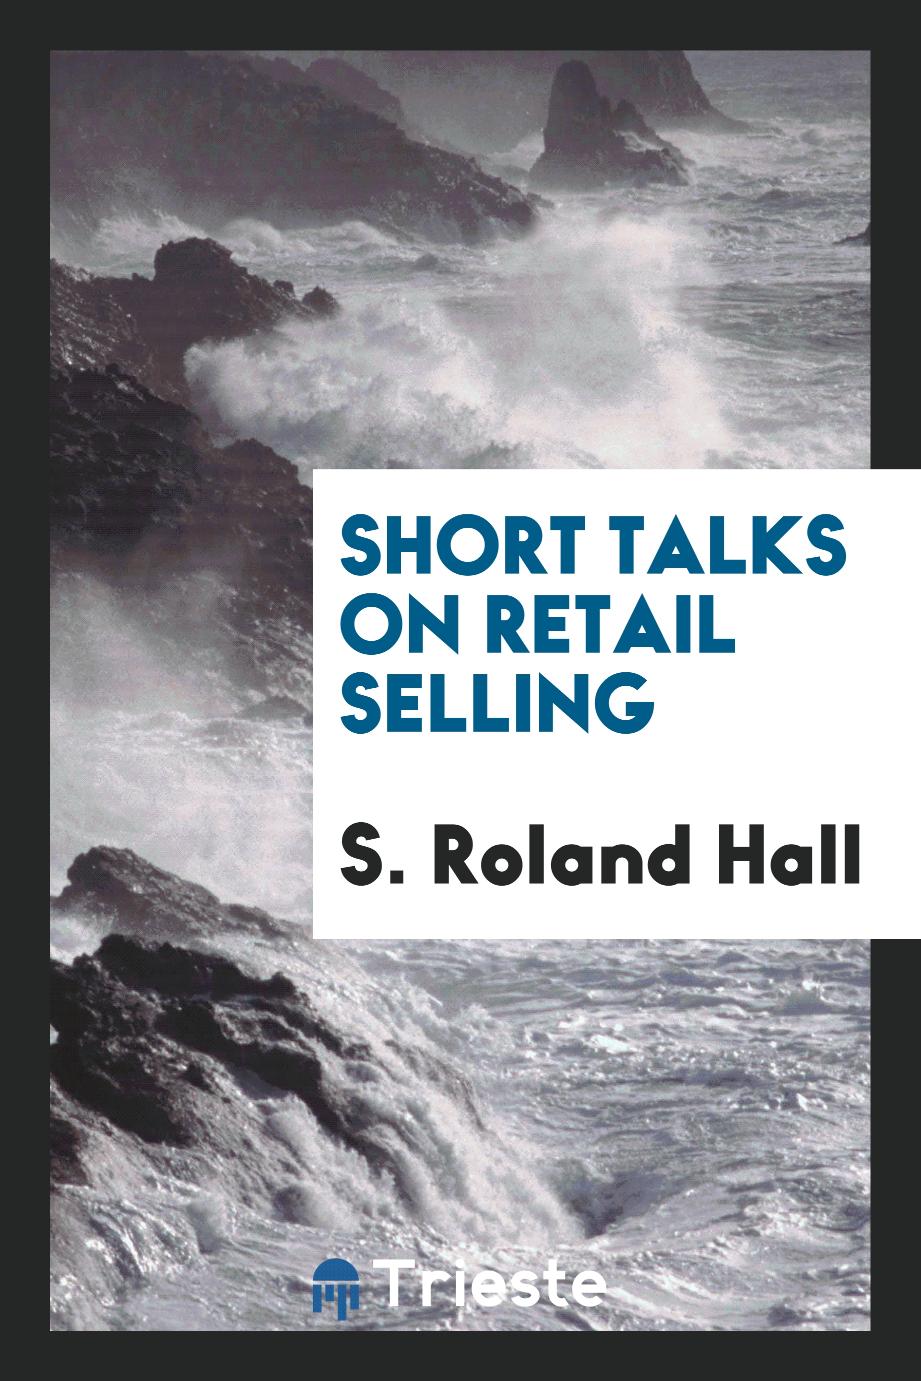 Short talks on retail selling